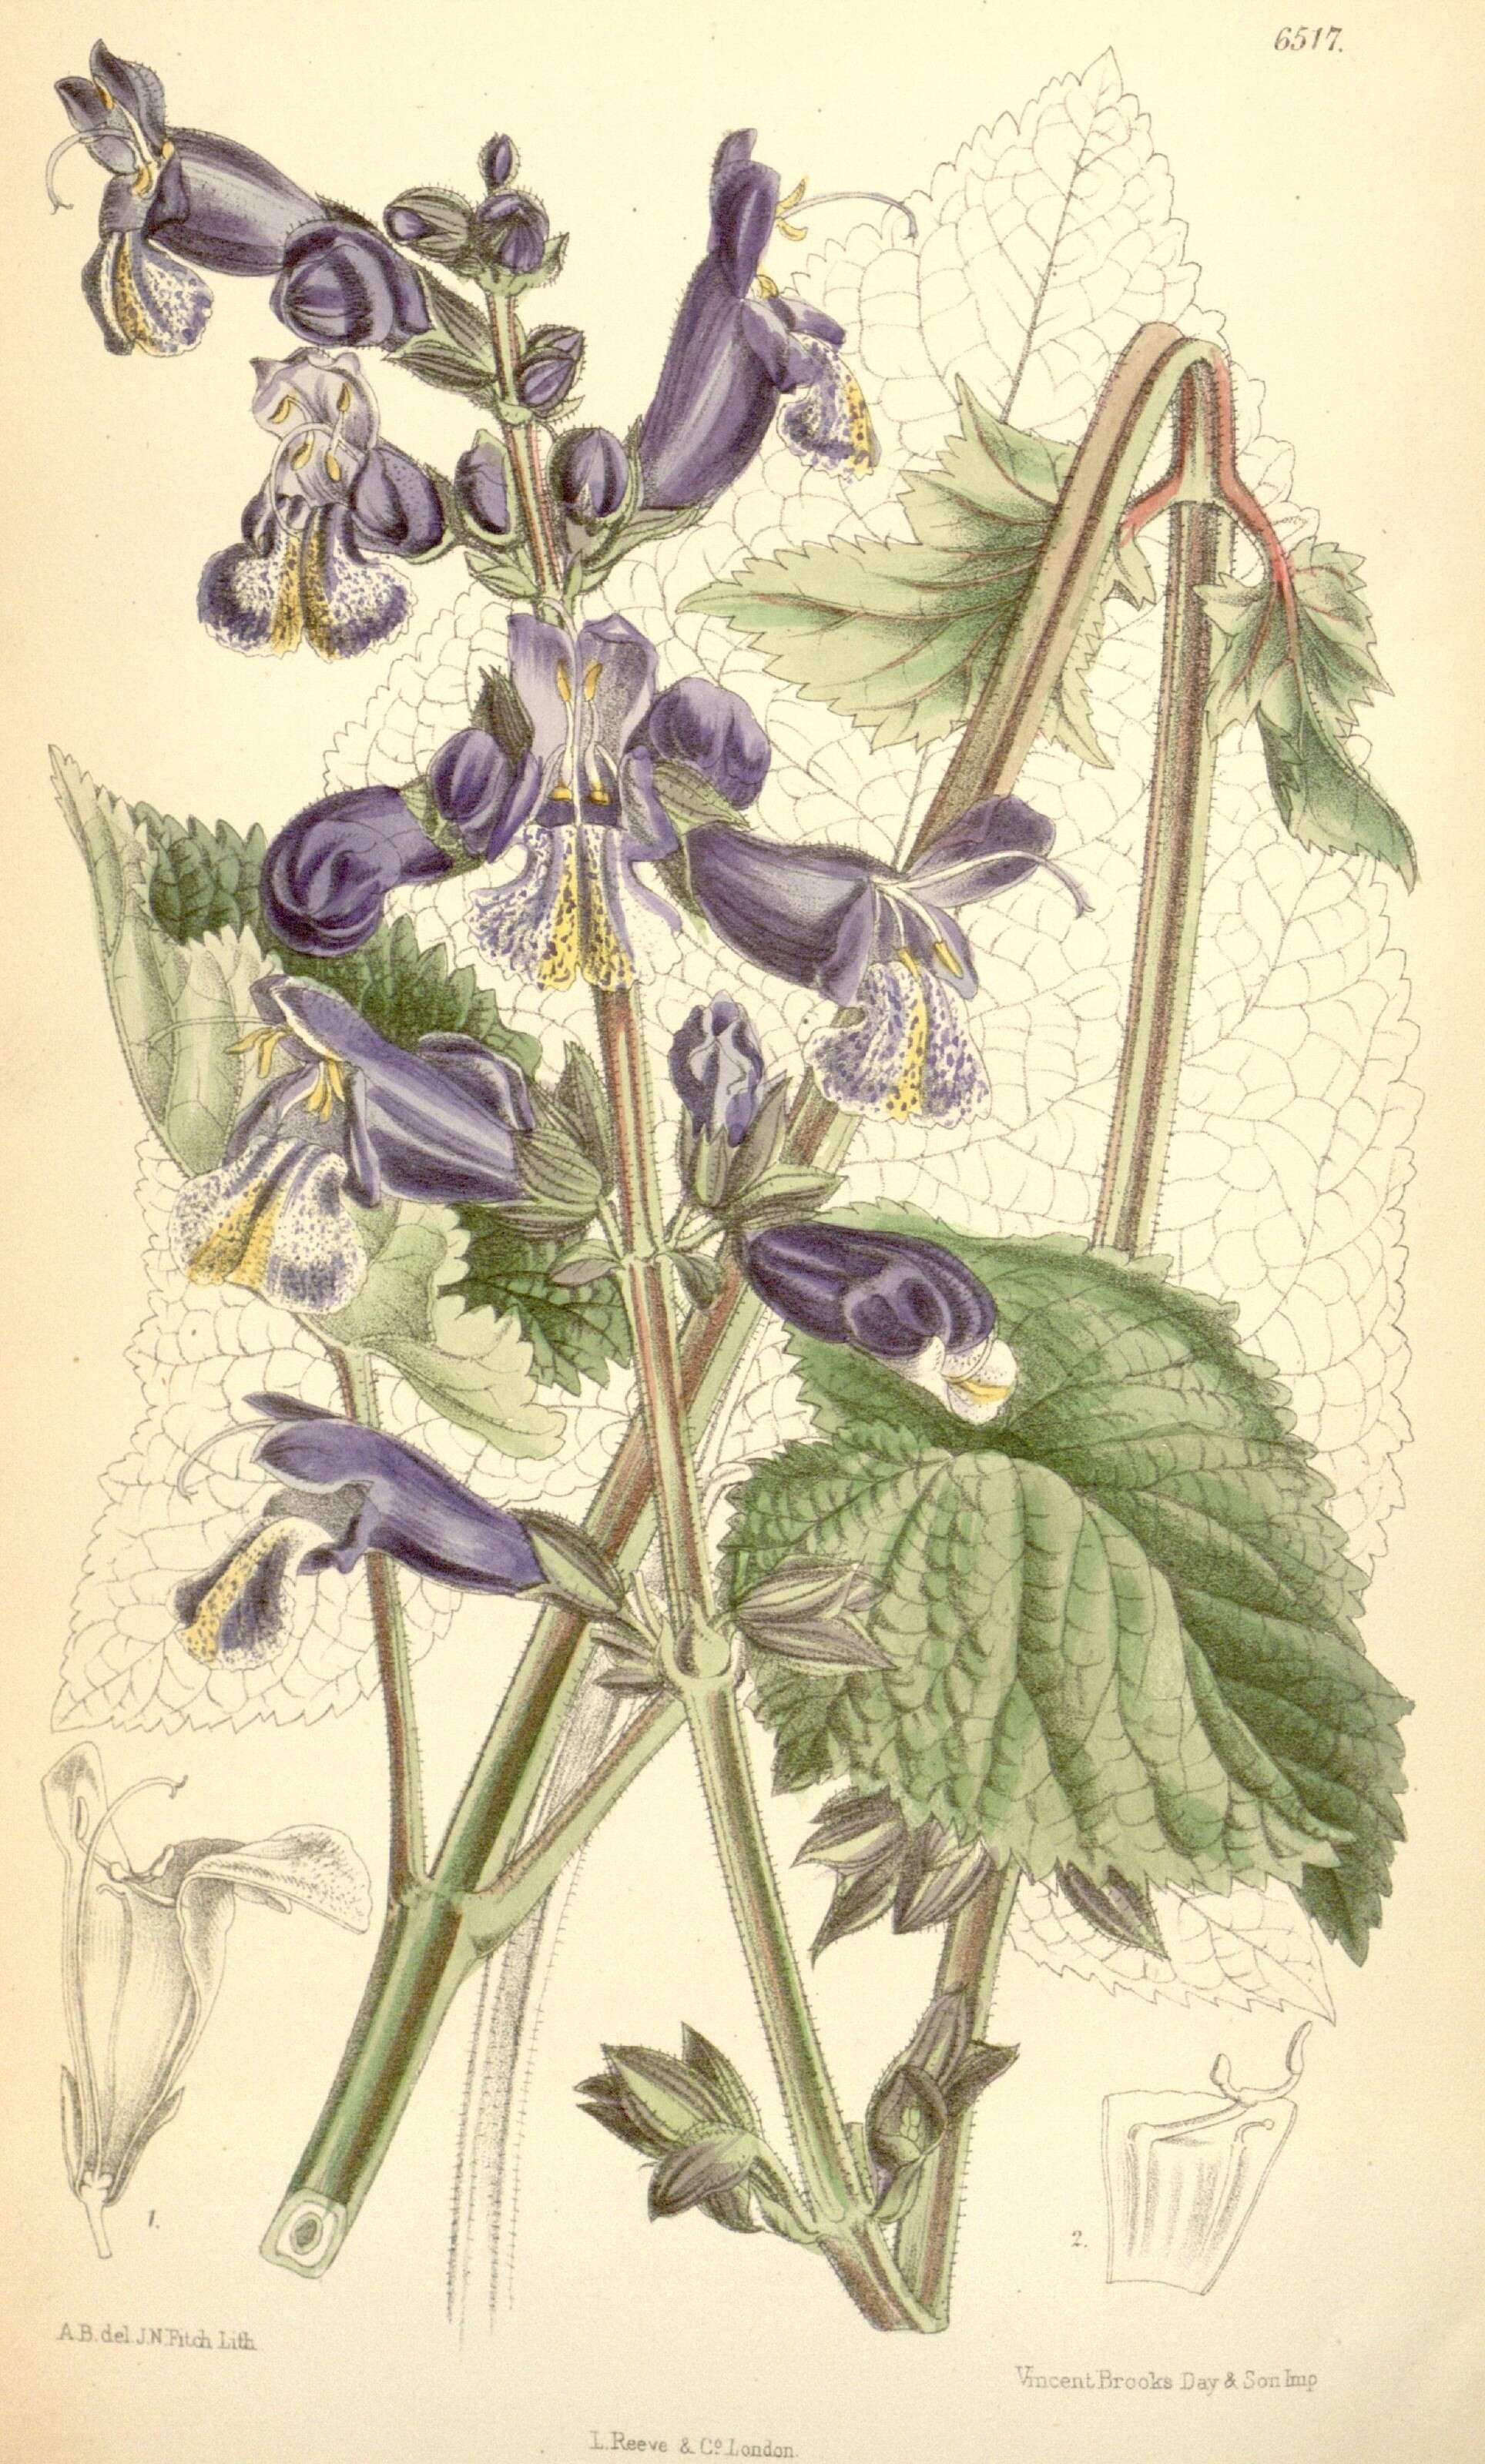 Sivun Salvia hians Royle ex Benth. kuva